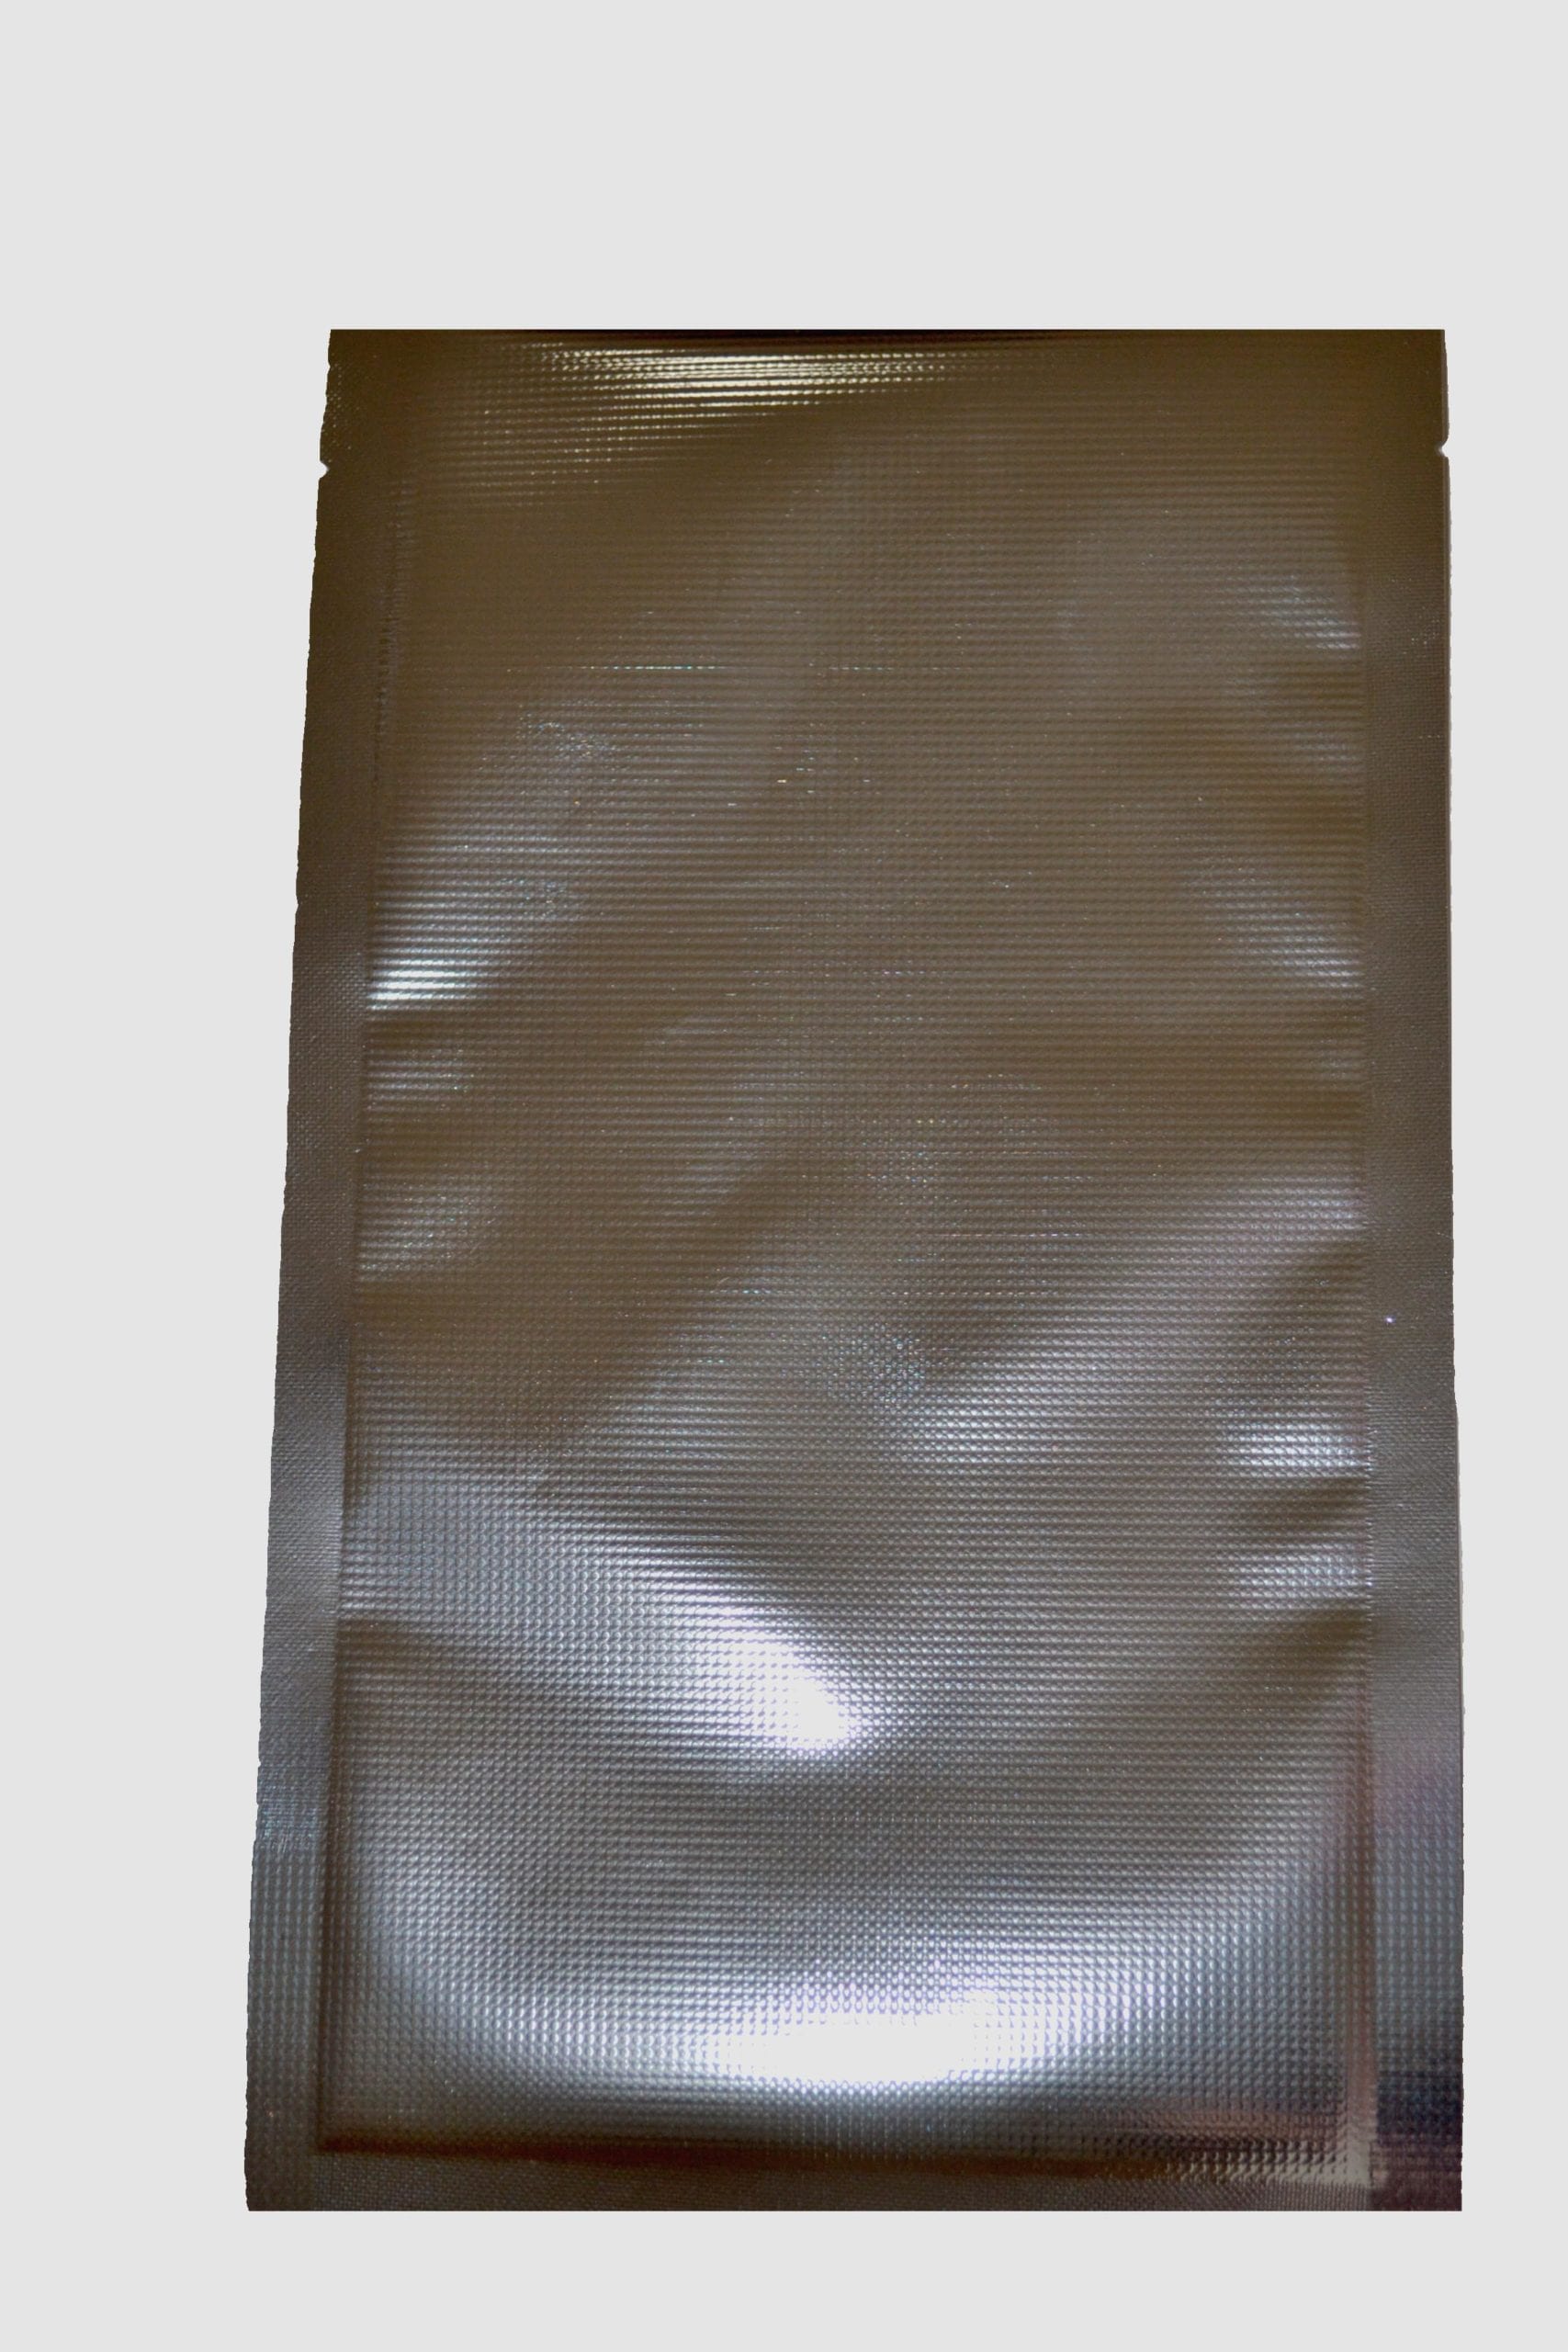 50 Textured 4MIL Mylar 8 x 12 Quart Vacuum Sealing Bags